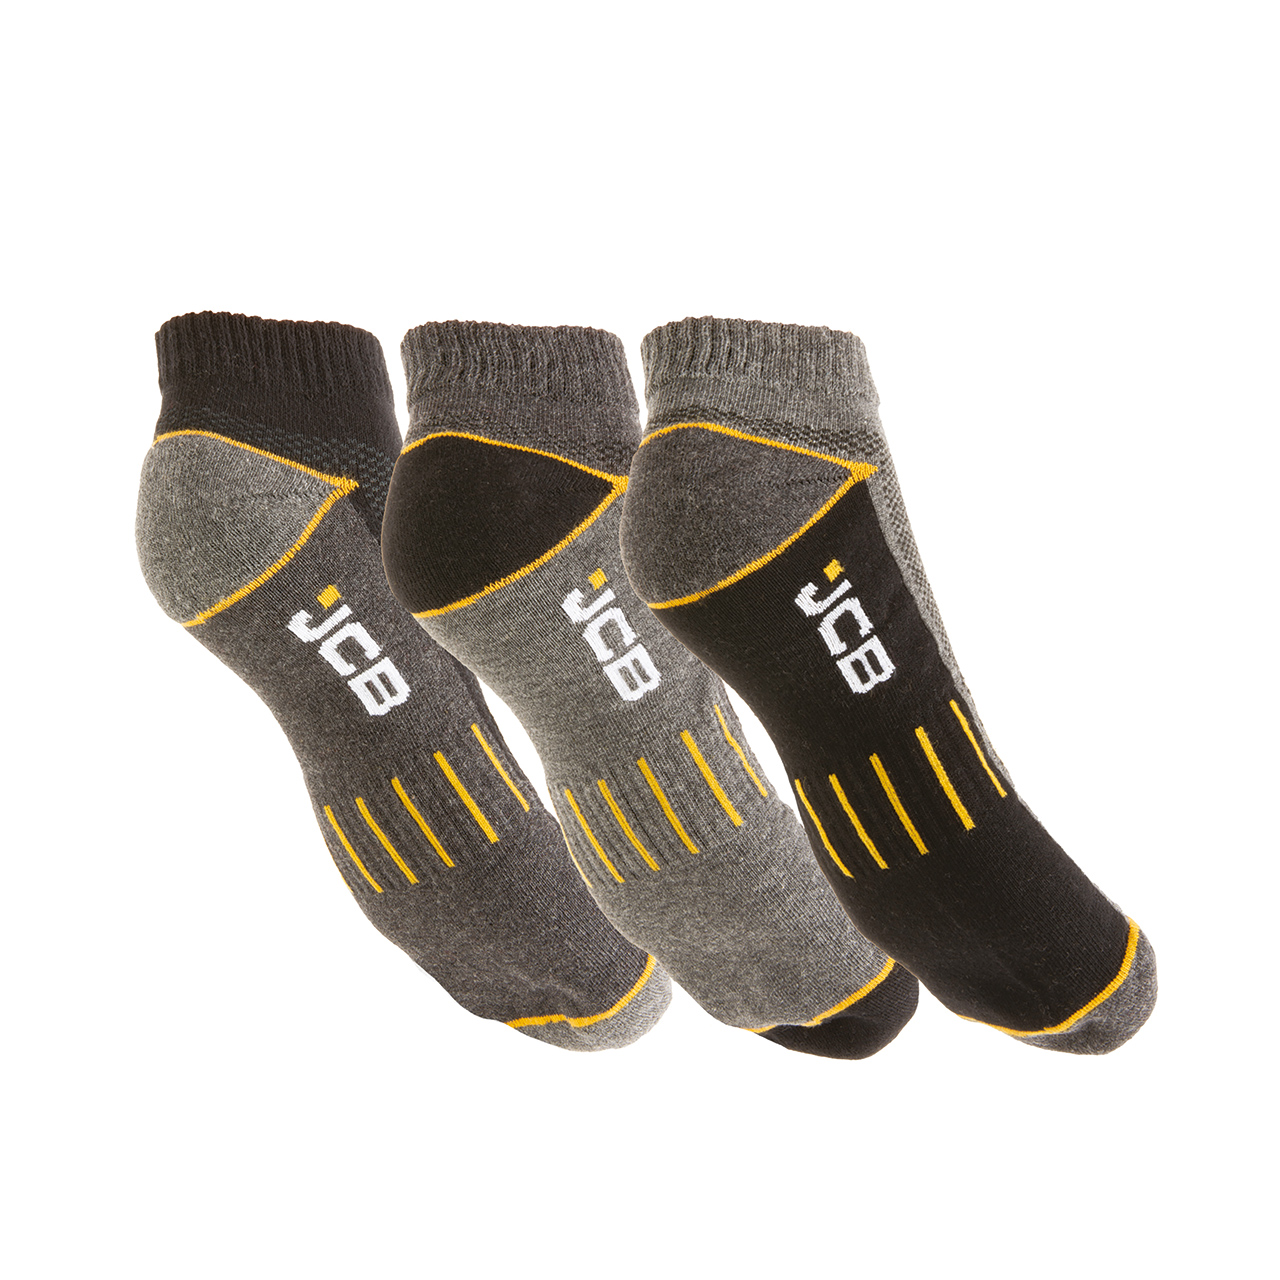 JCB Ankle Work Socks - 3 pairs